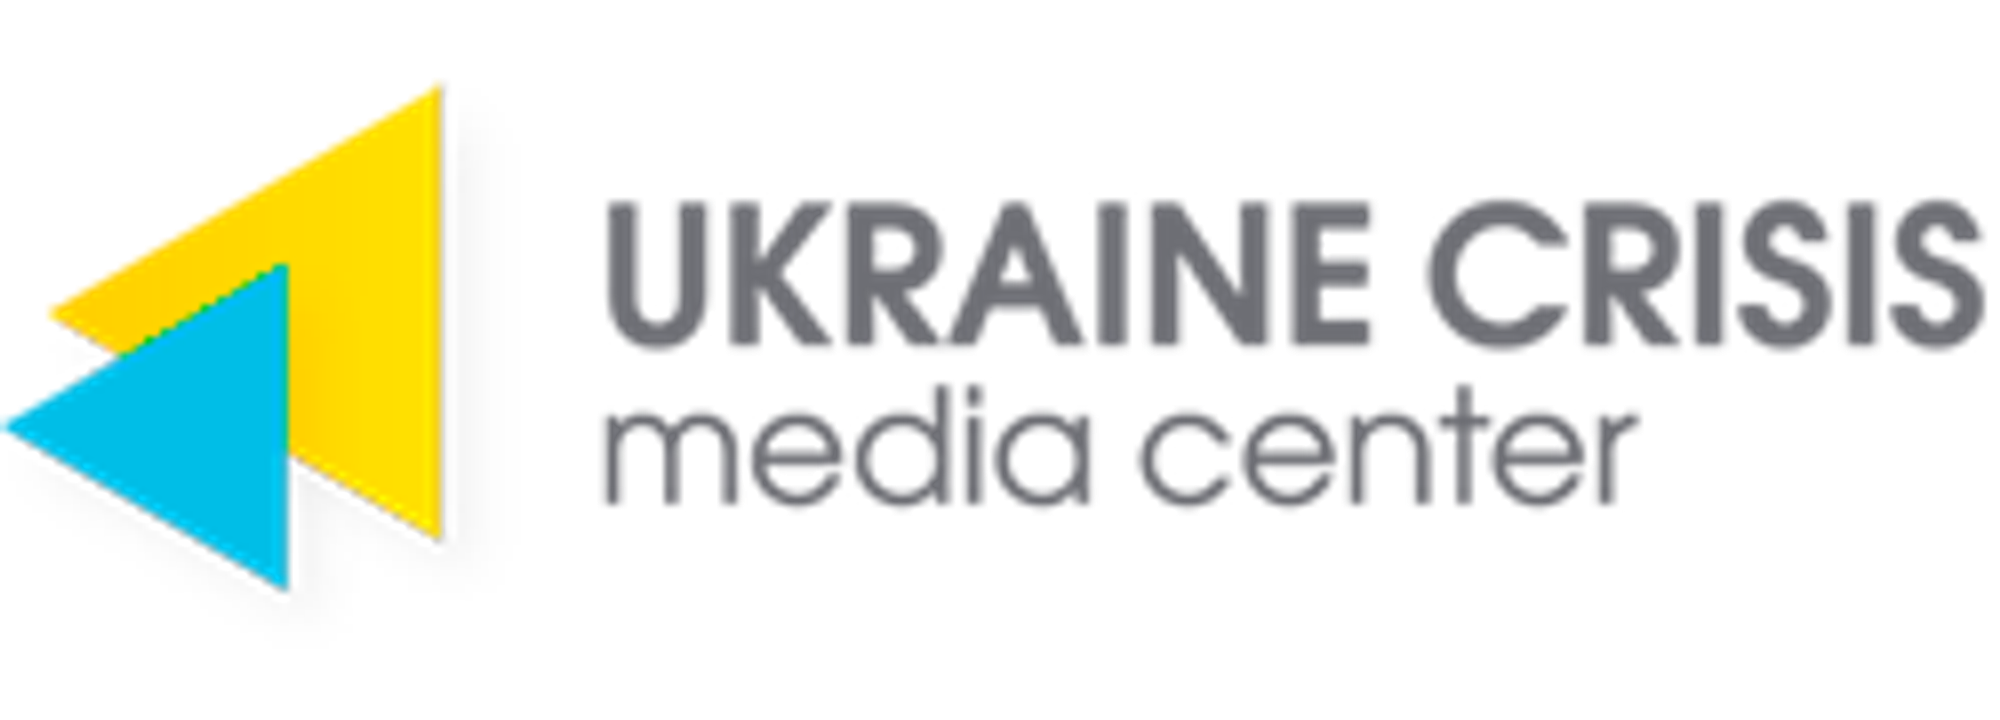 Ukrainian Crisis Media Center